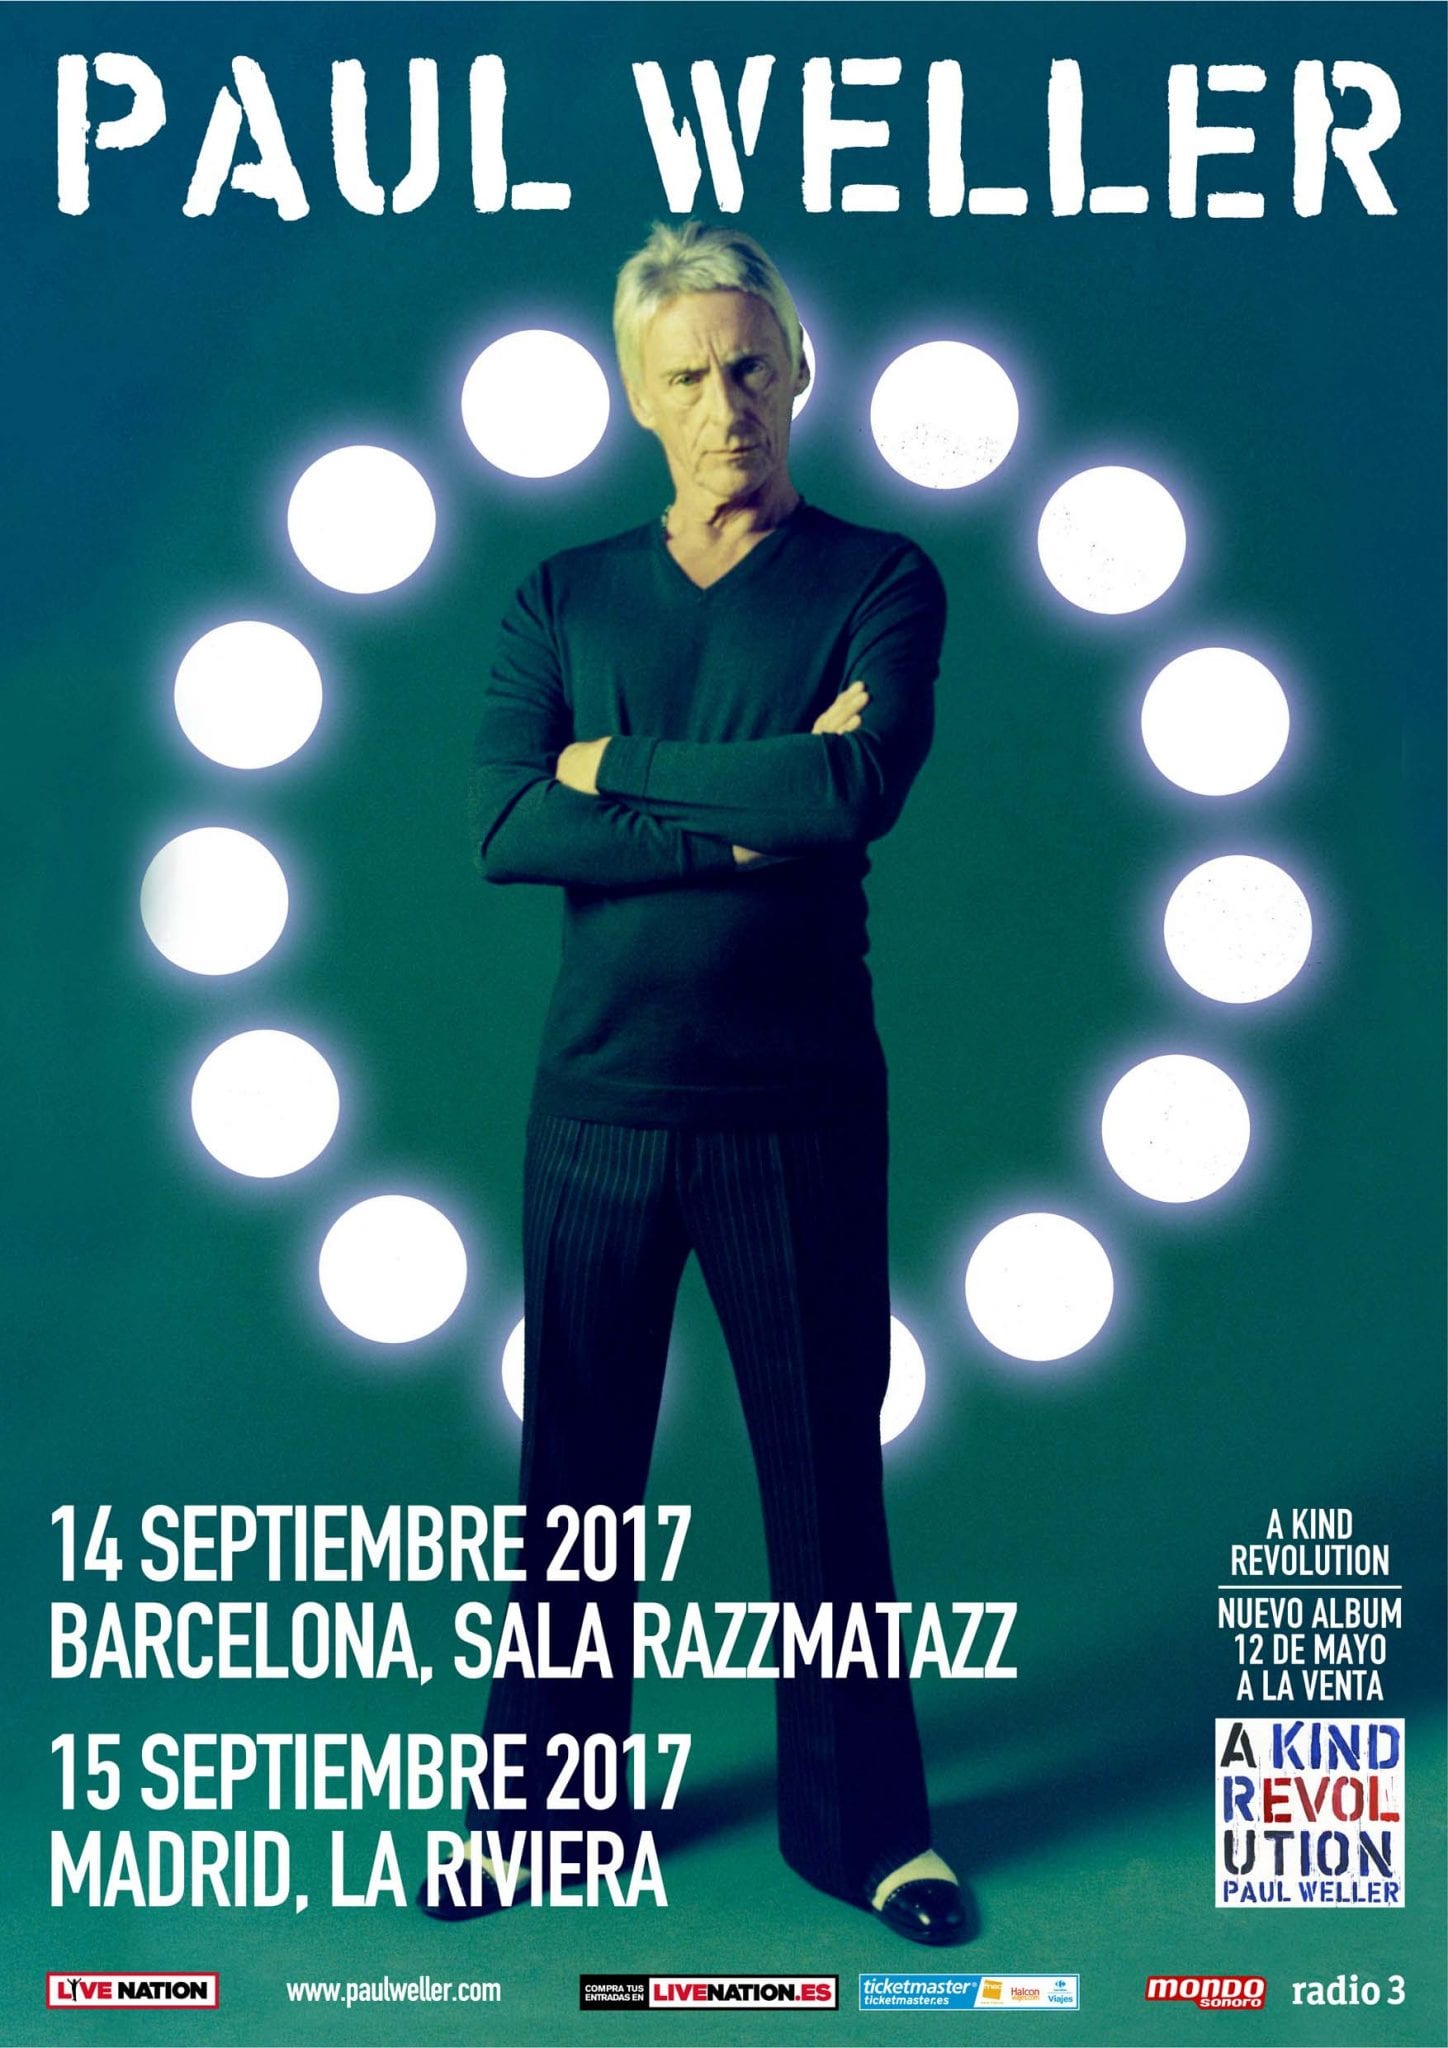 PAUL WELLER en Madrid y Barcelona en septiembre